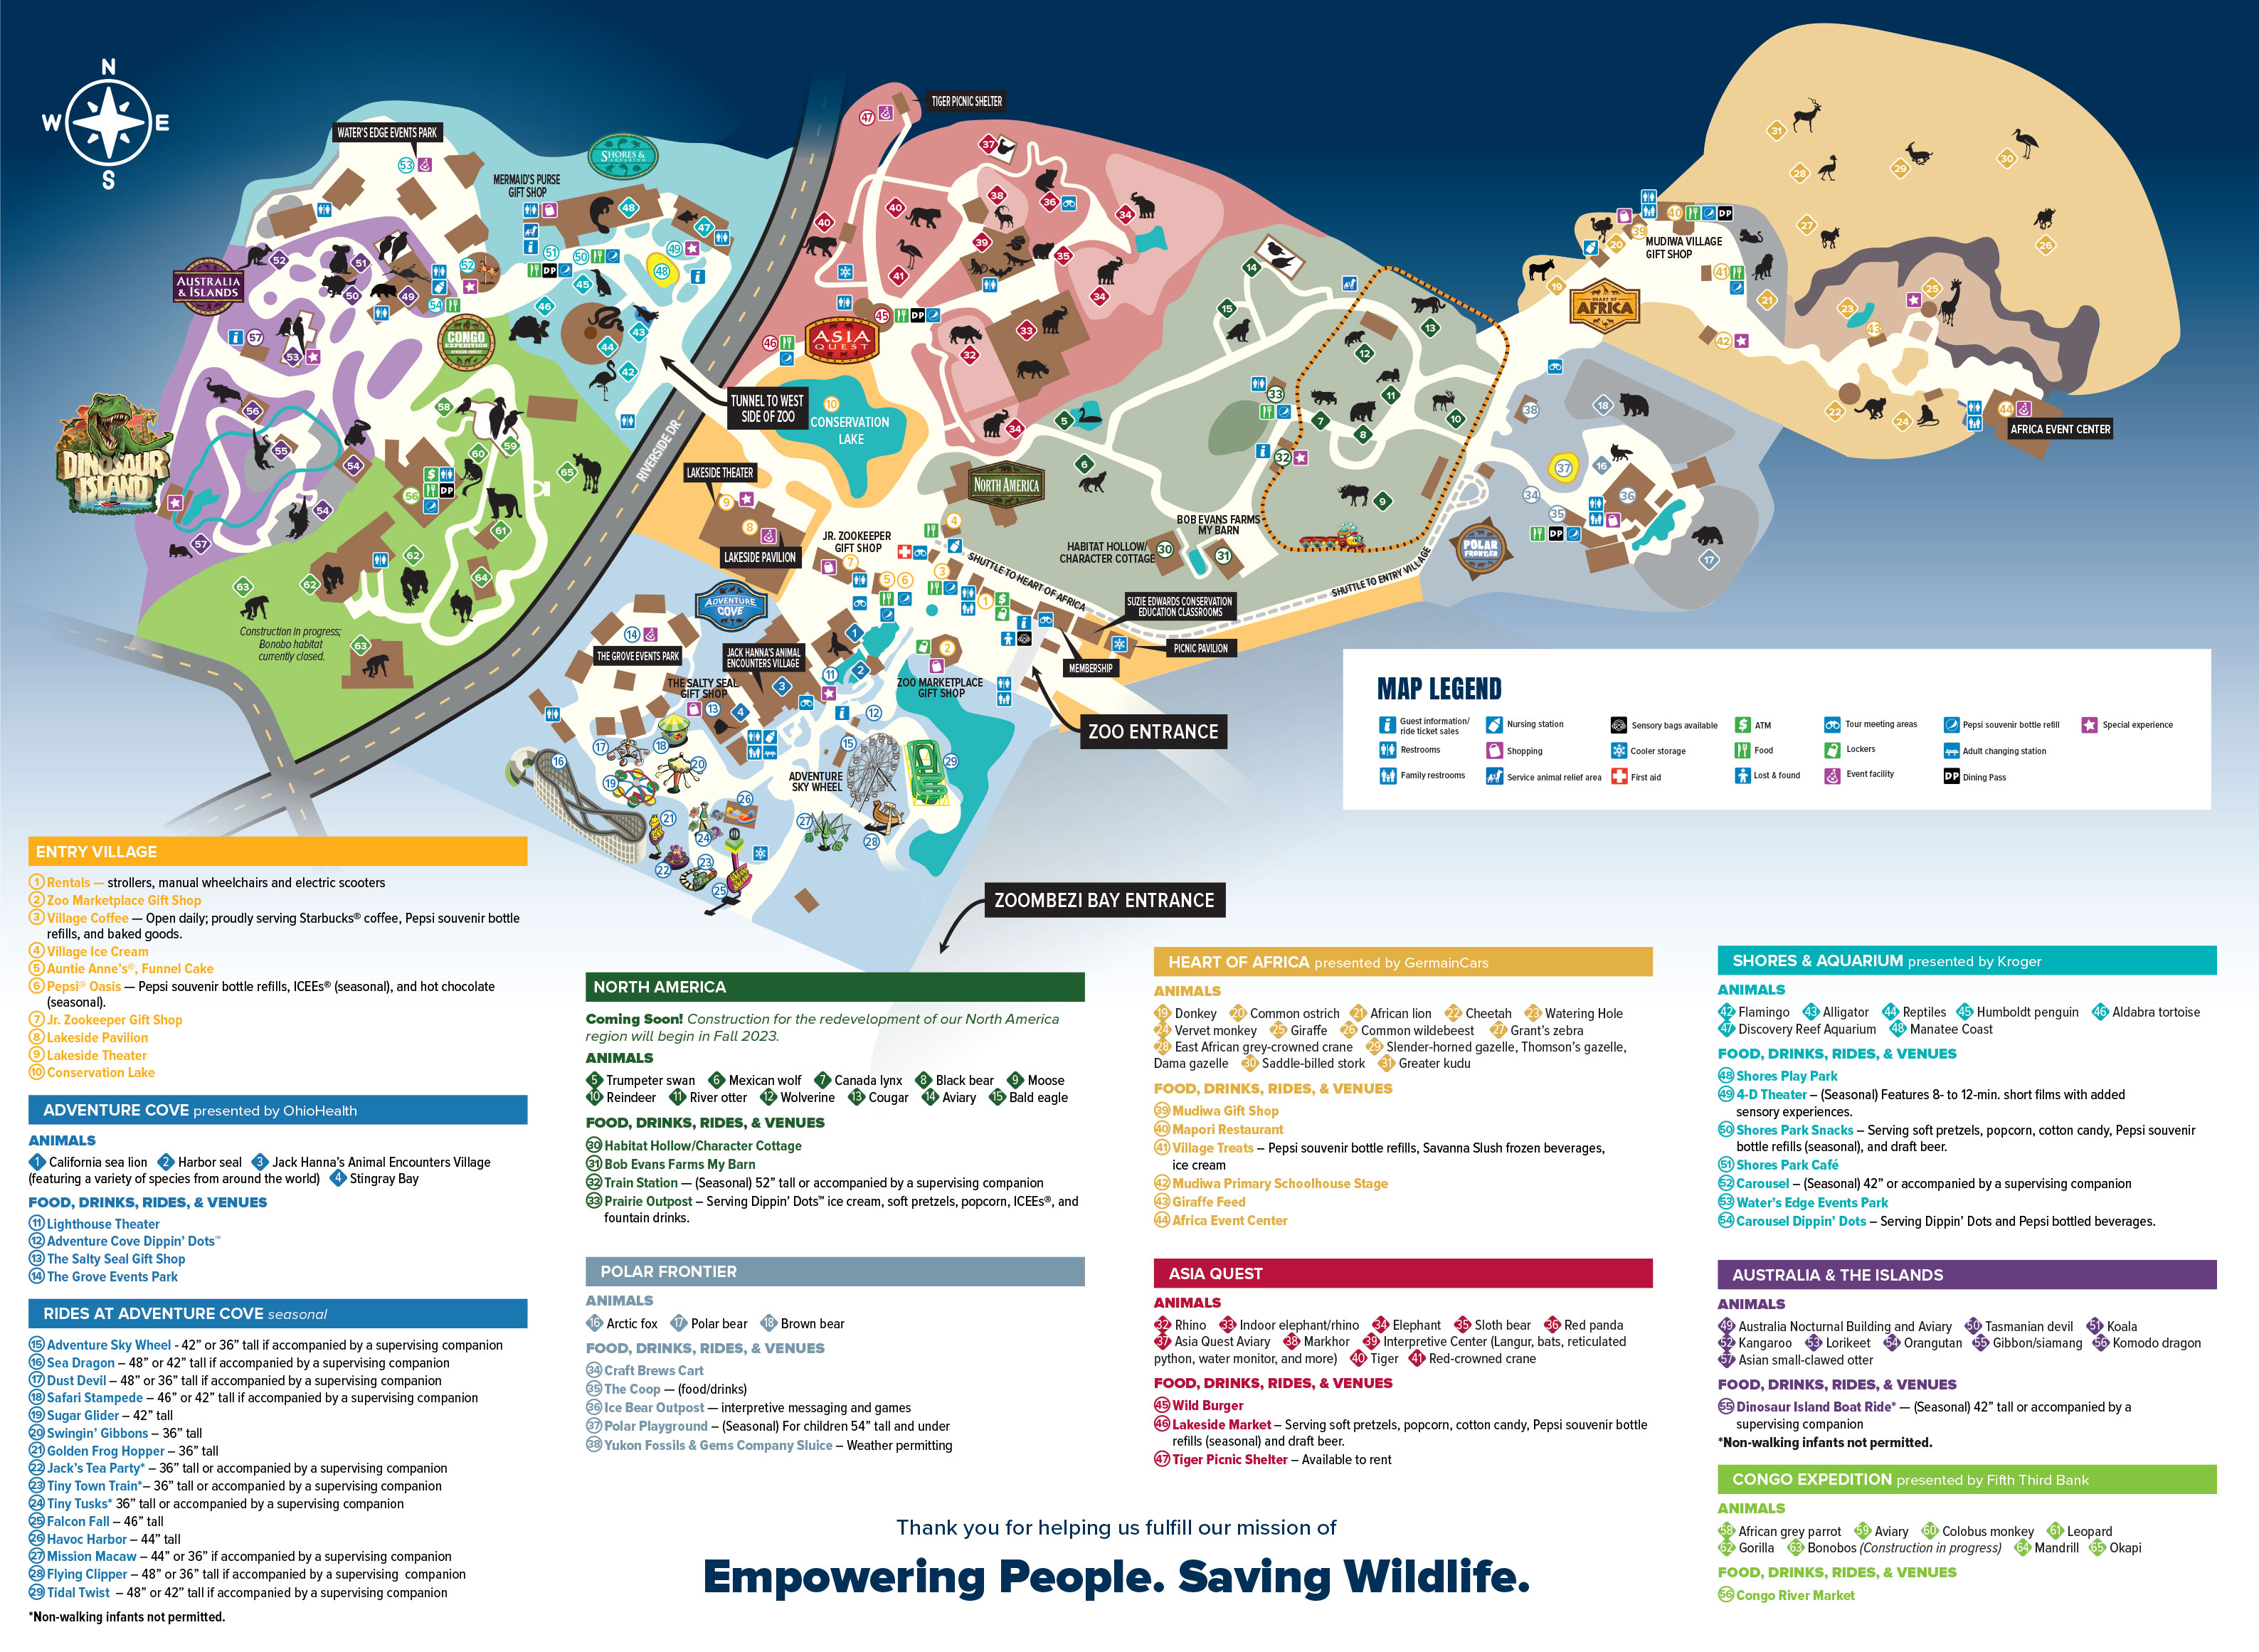 Areas of the Zoo Columbus Zoo and Aquarium